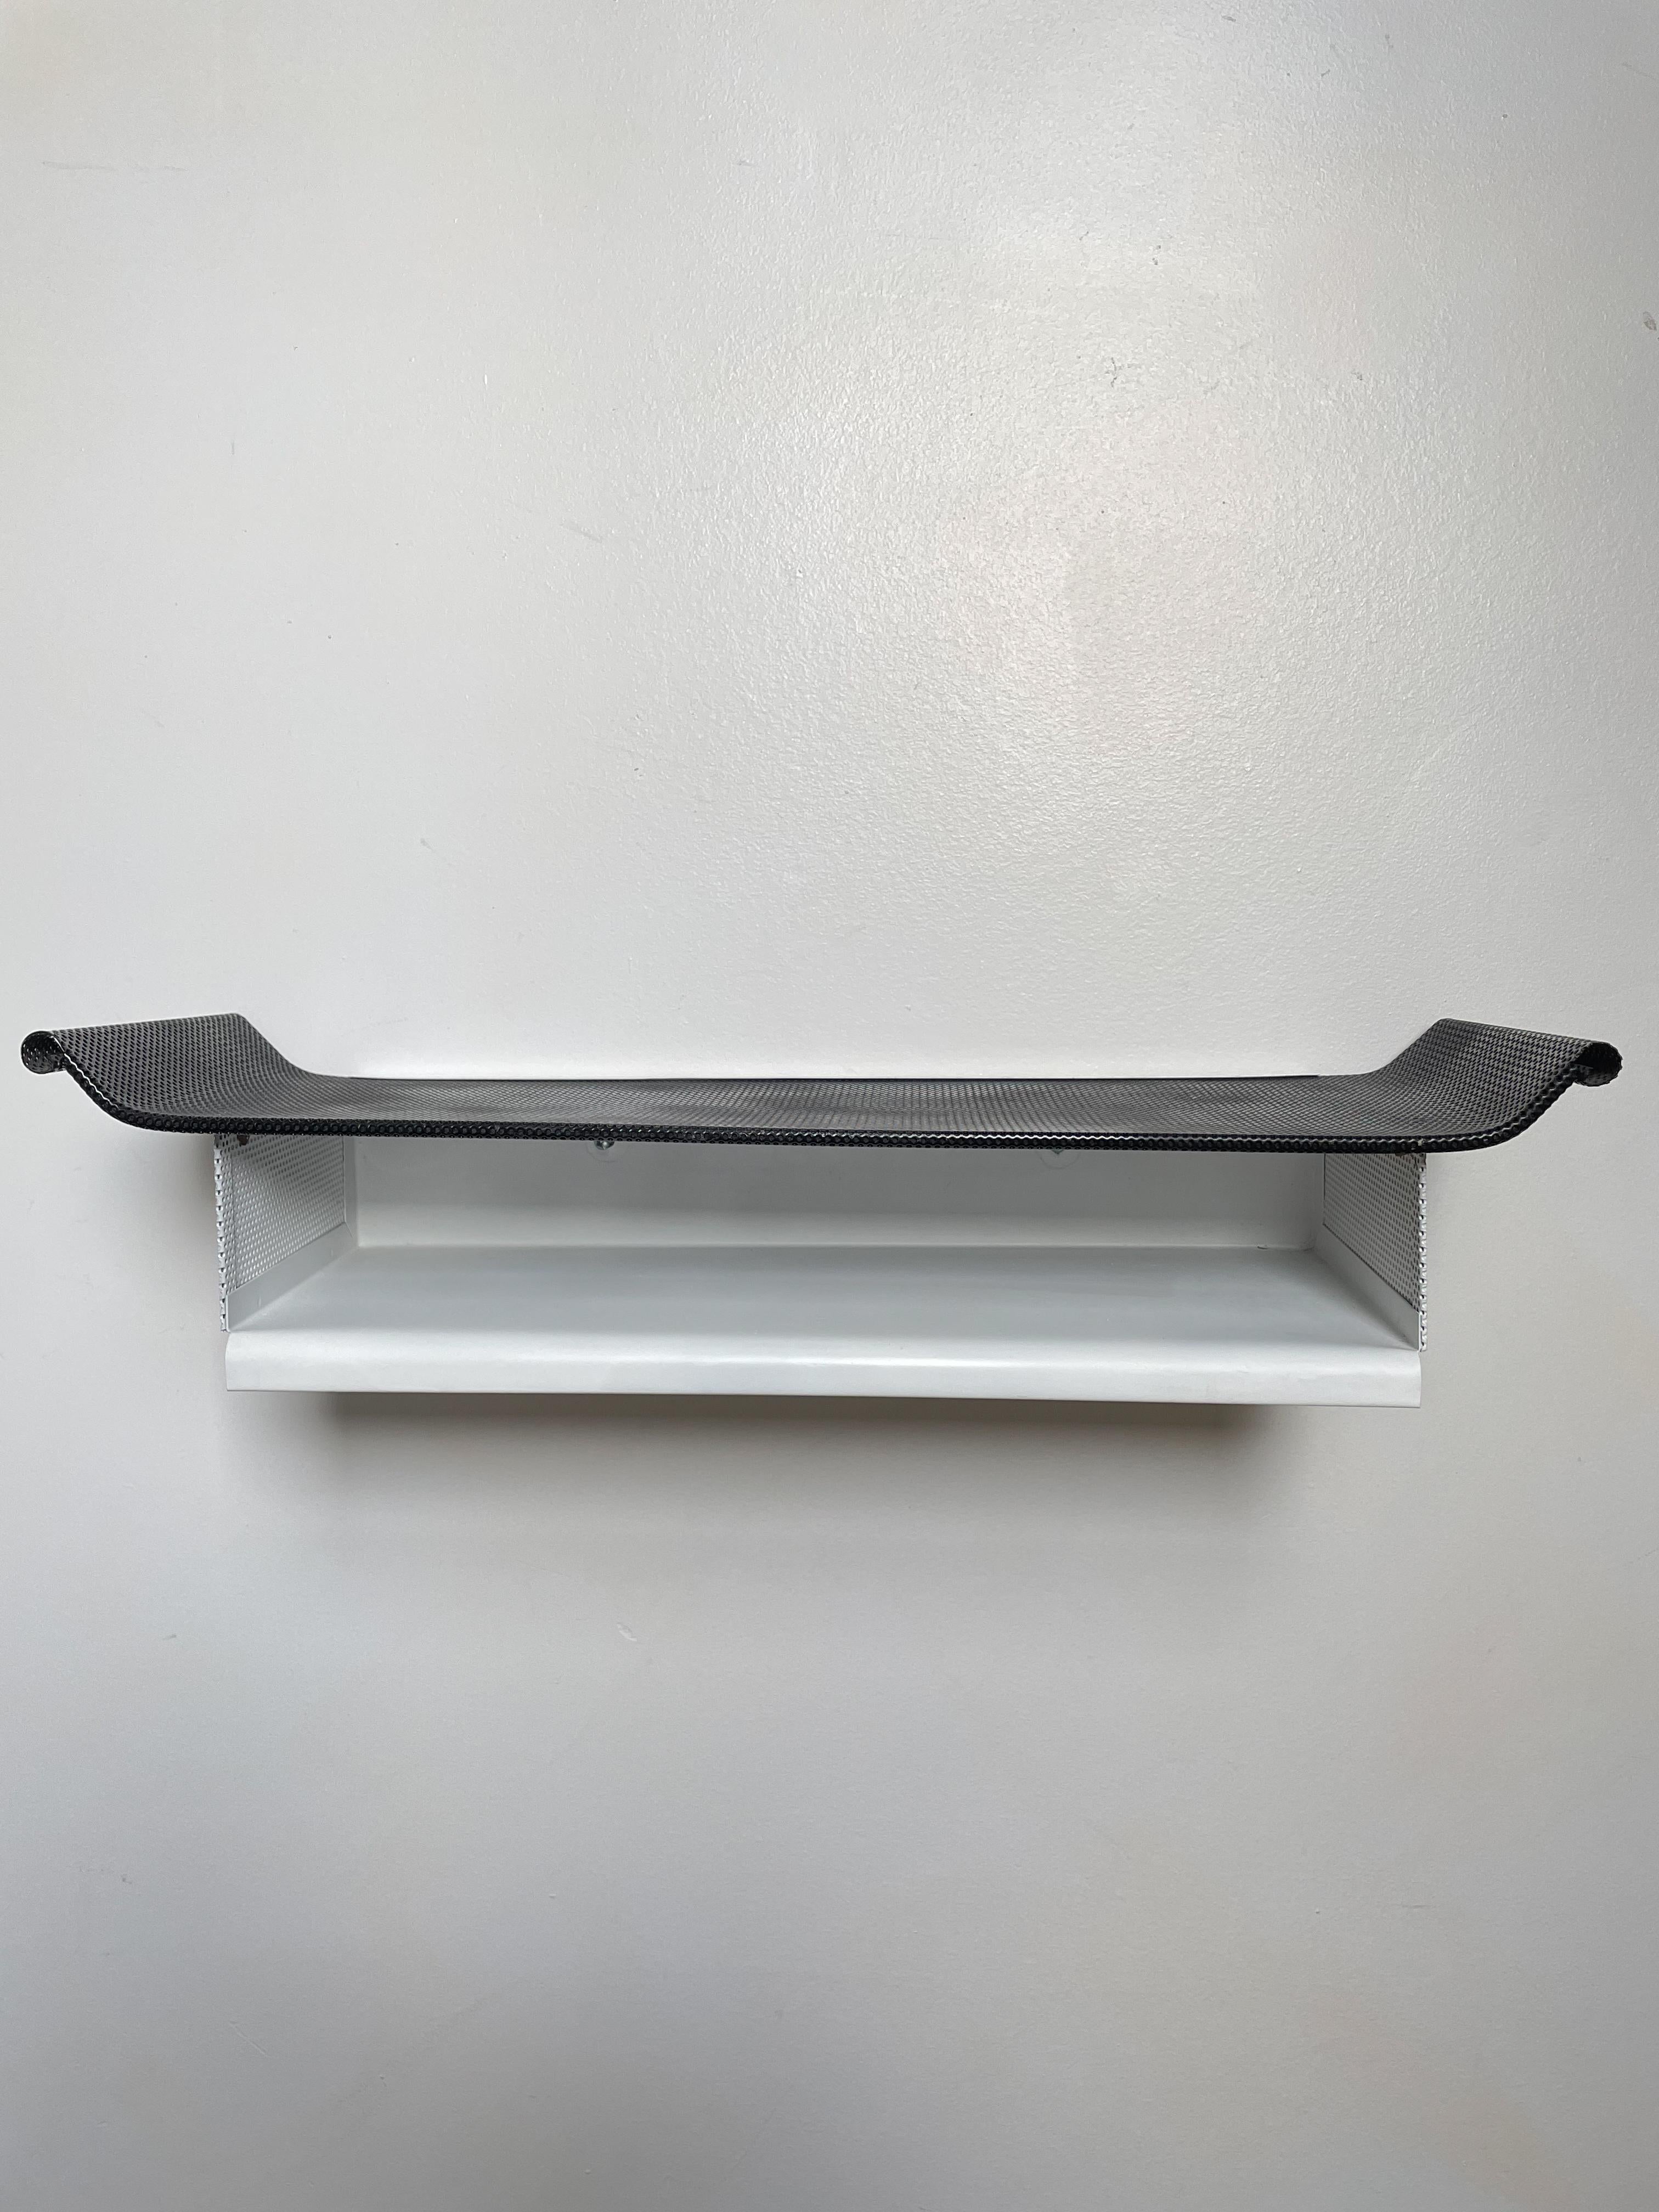 A black and white perforated metal wall shelf by Mathieu Matégot.